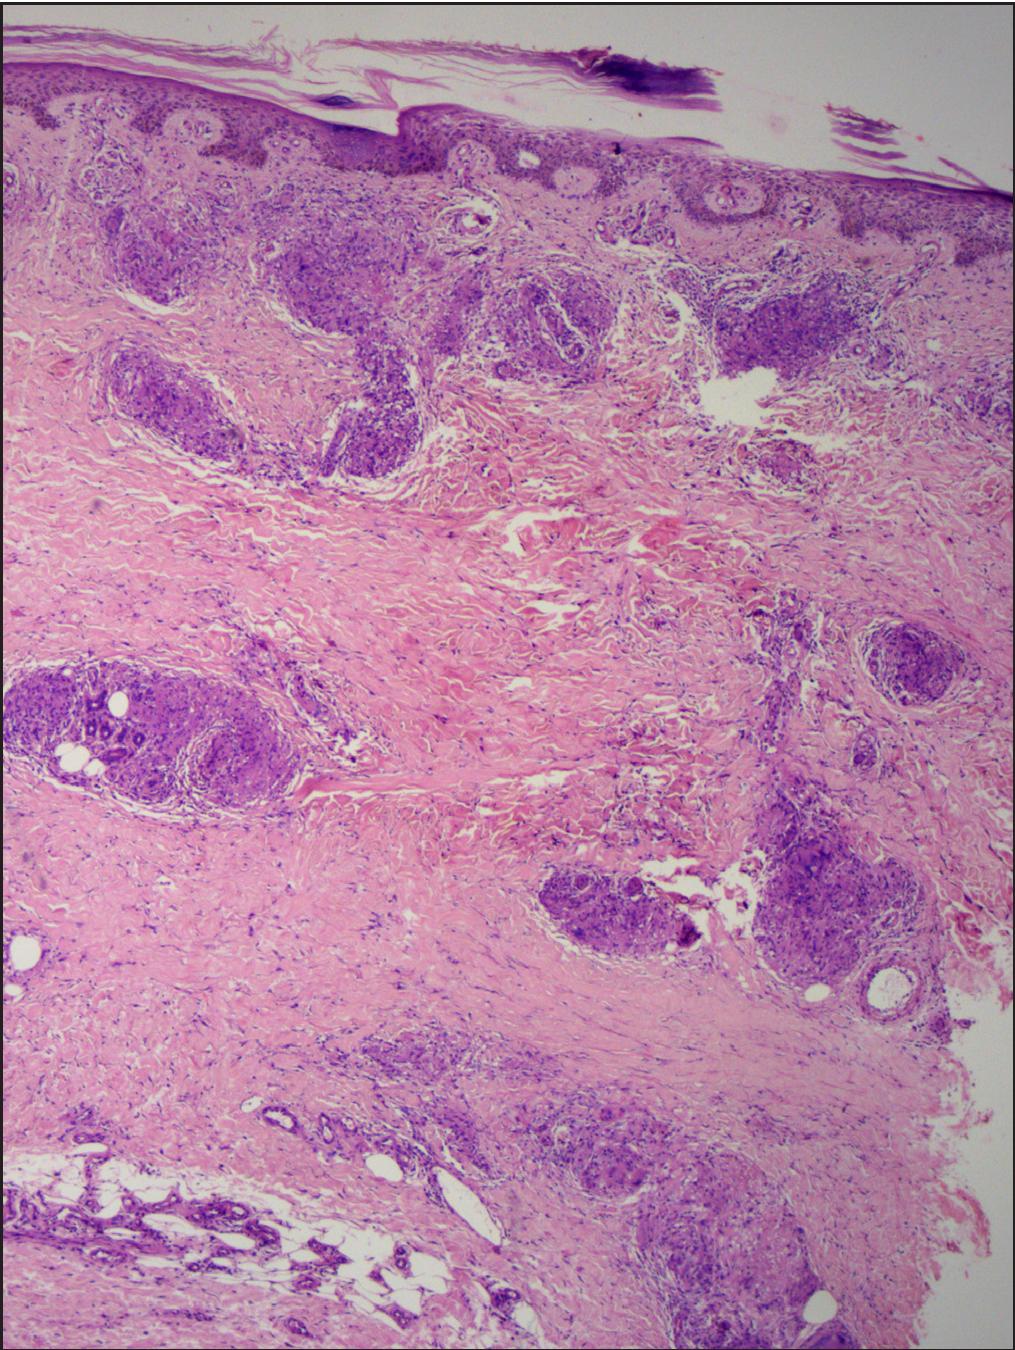 Histopathology shows multiple non-caseating naked epithelioid granulomas in the dermis and subcutaneous tissue (Haematoxylin & Eosin, 50x)